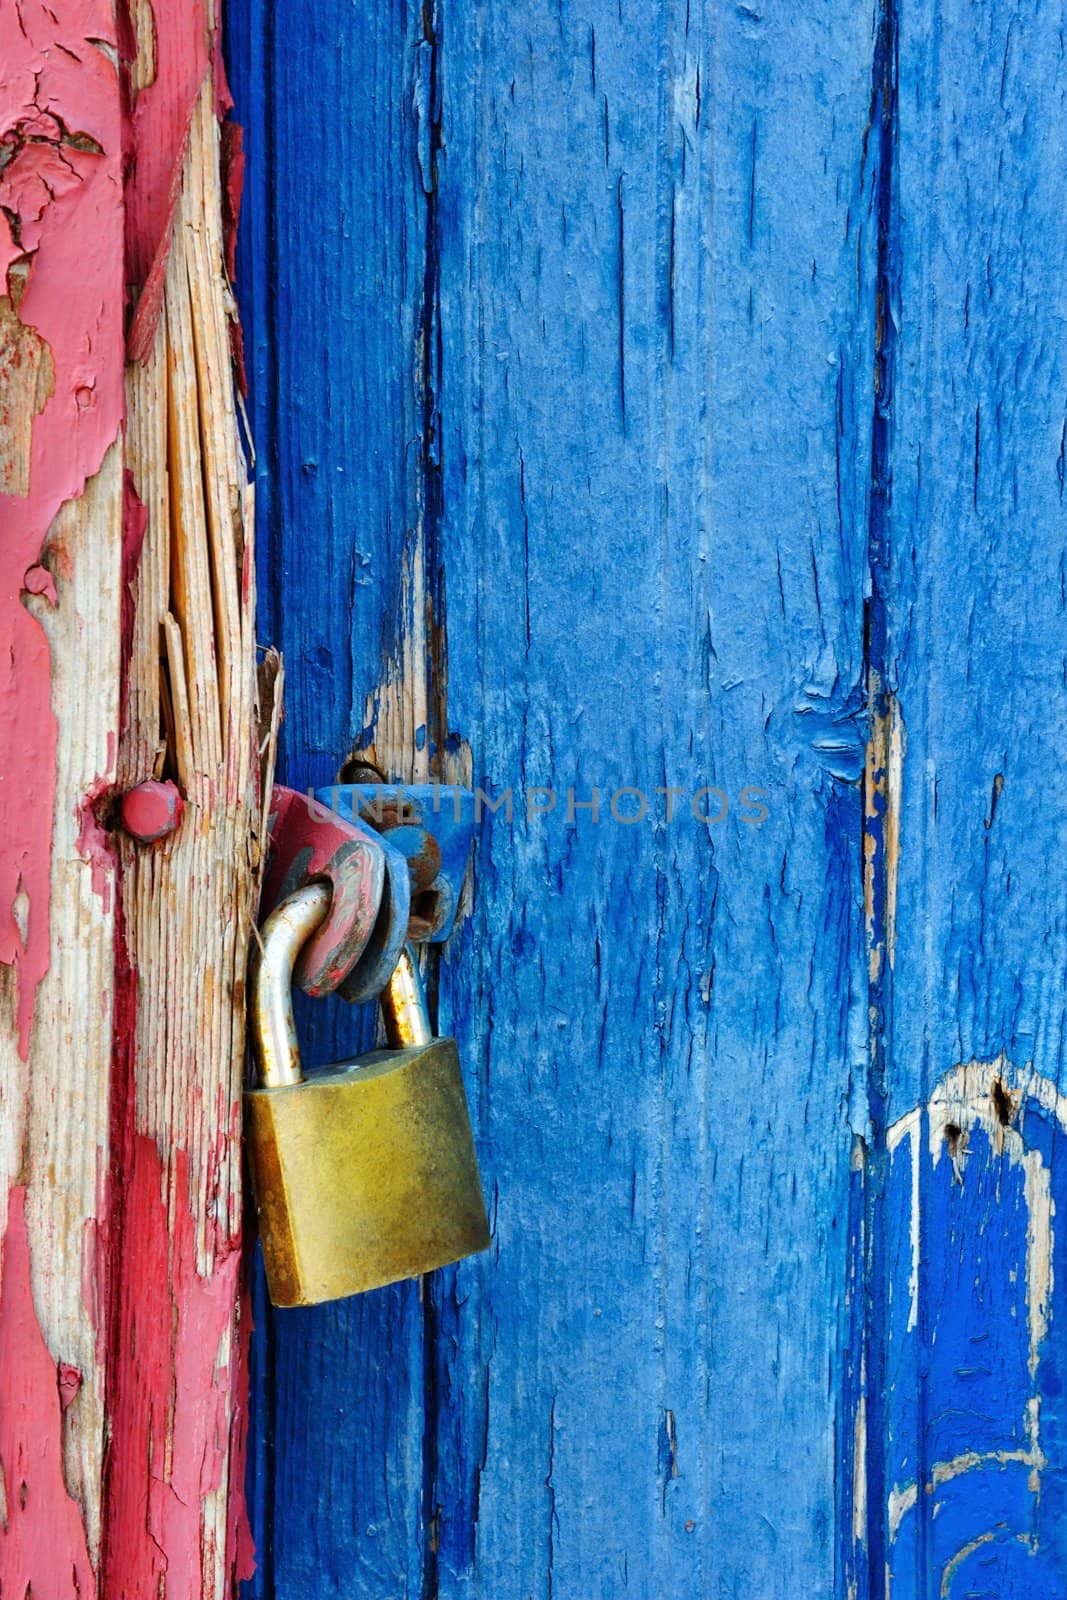 Padlock locking a highly textured wooden door